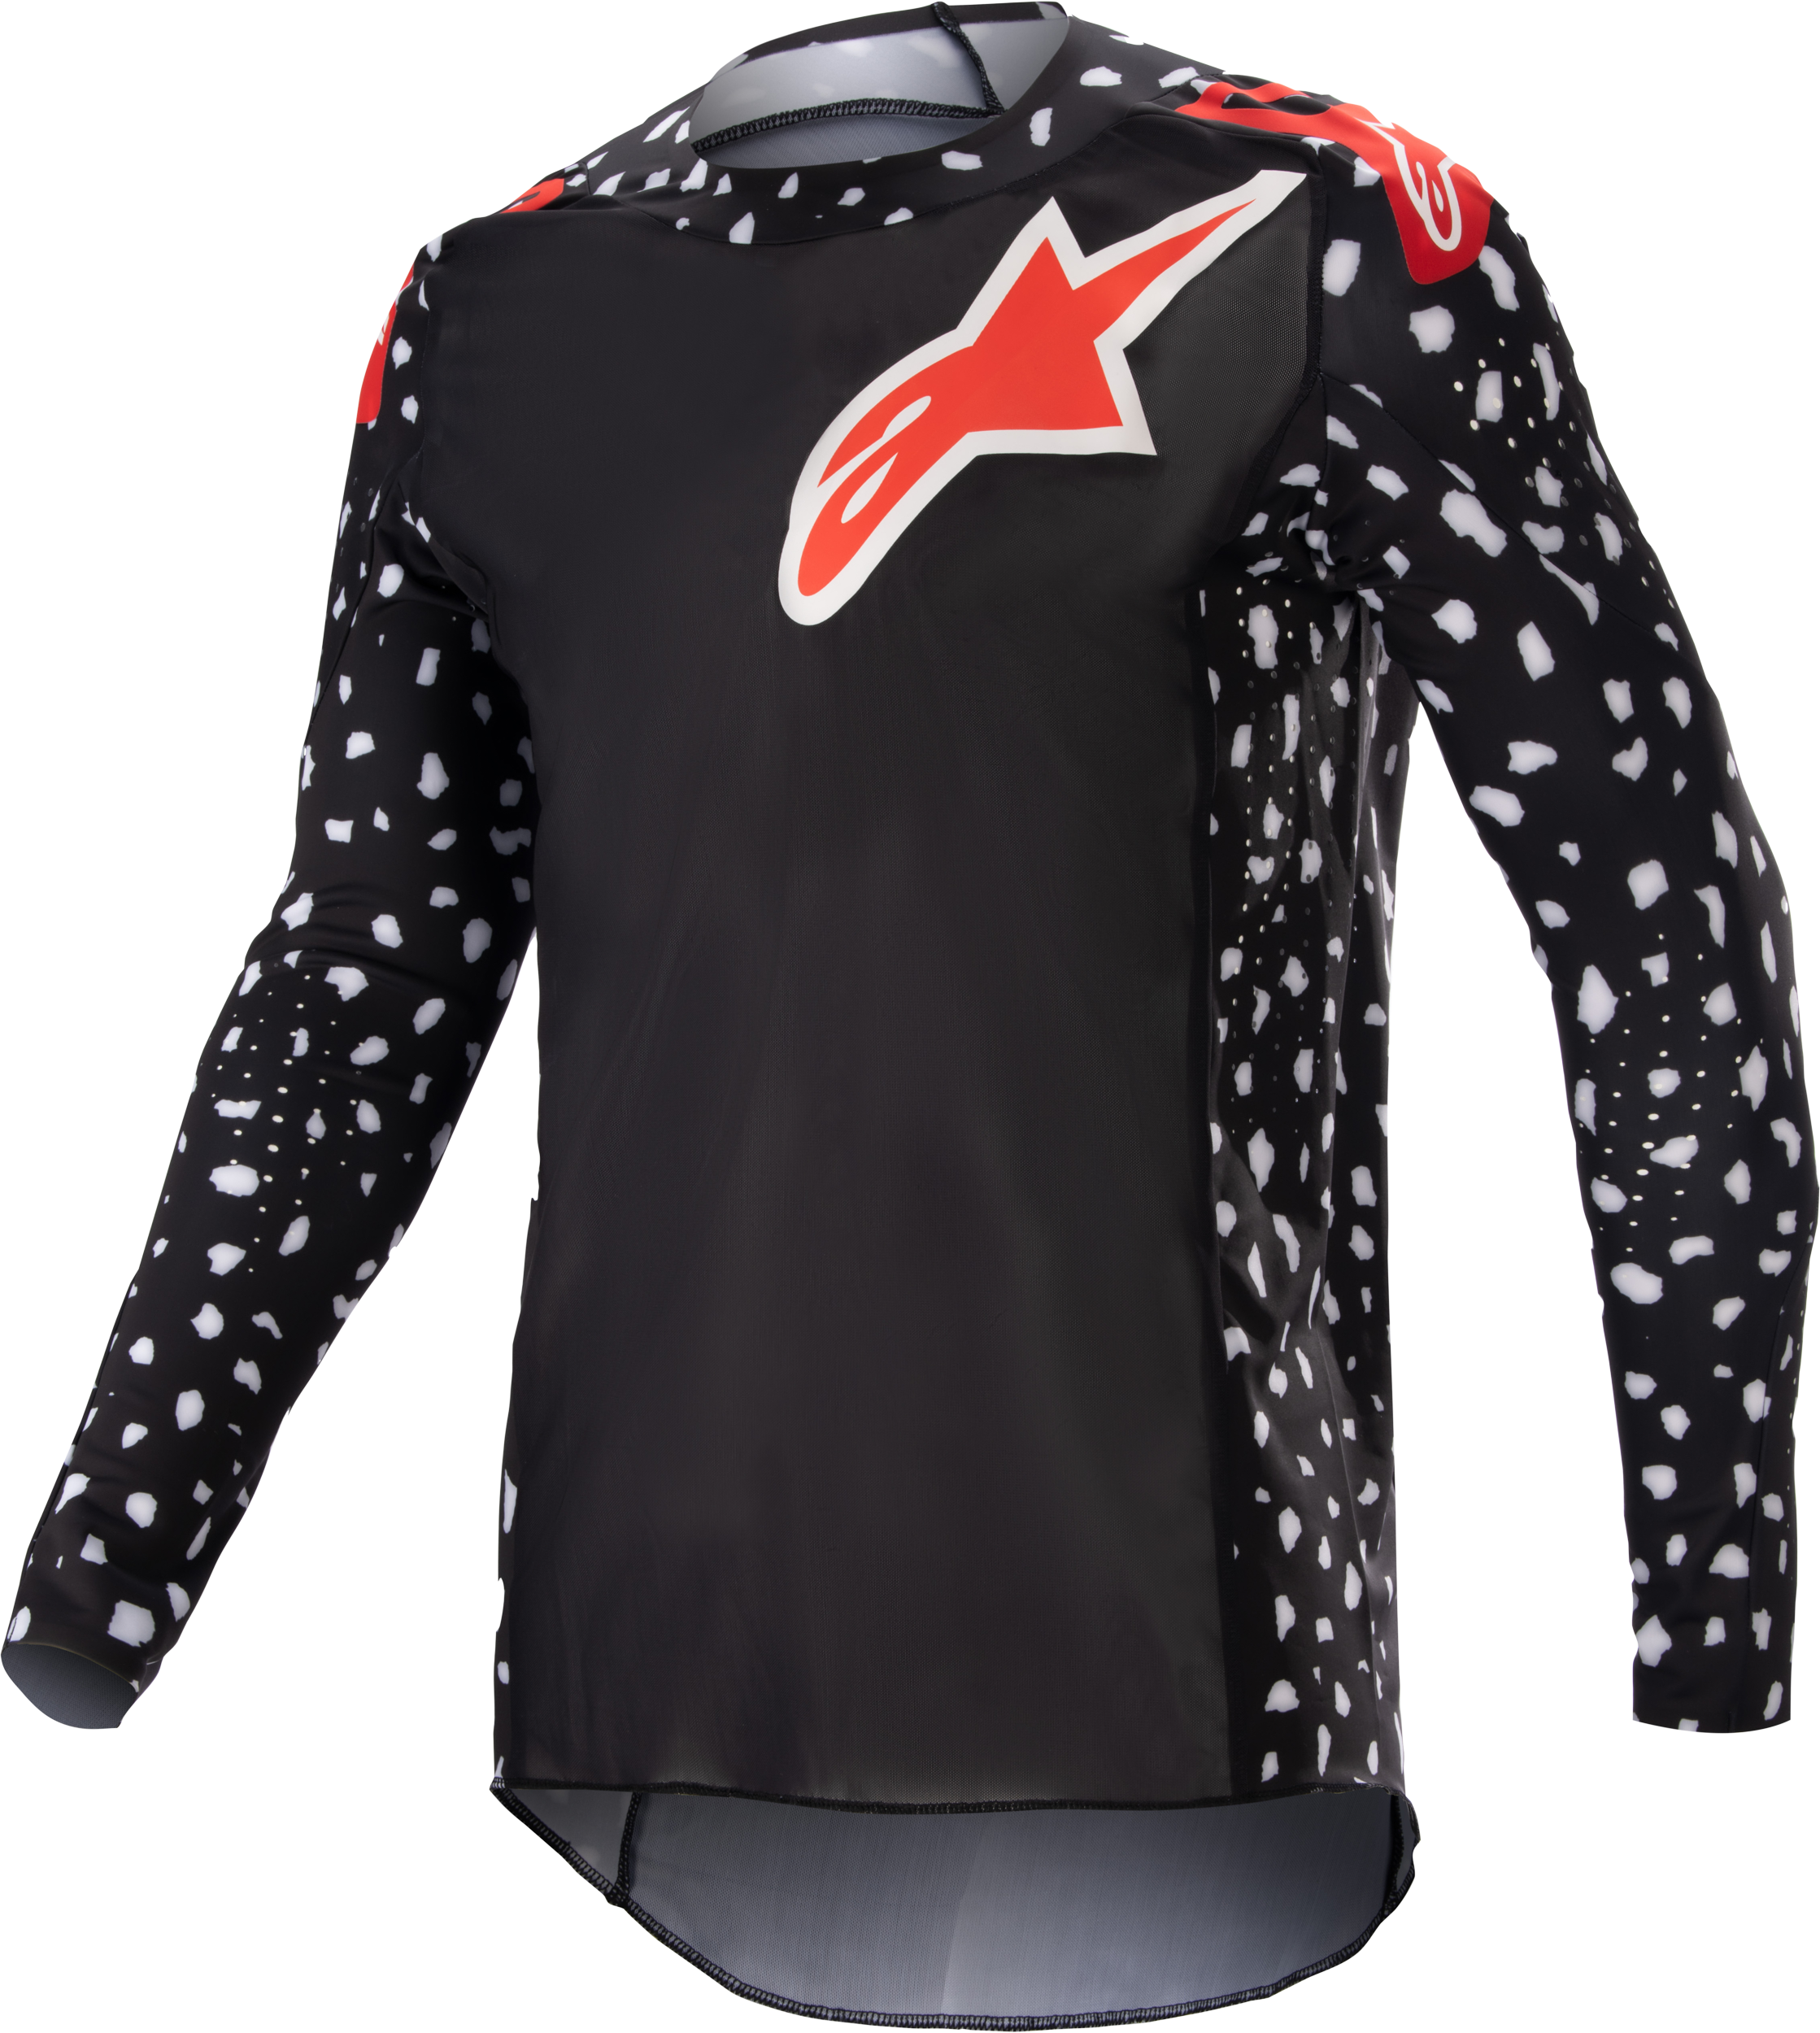 Alpinestars Supertech Jersey Black/Neon Red Large 3760523-1397-Lg